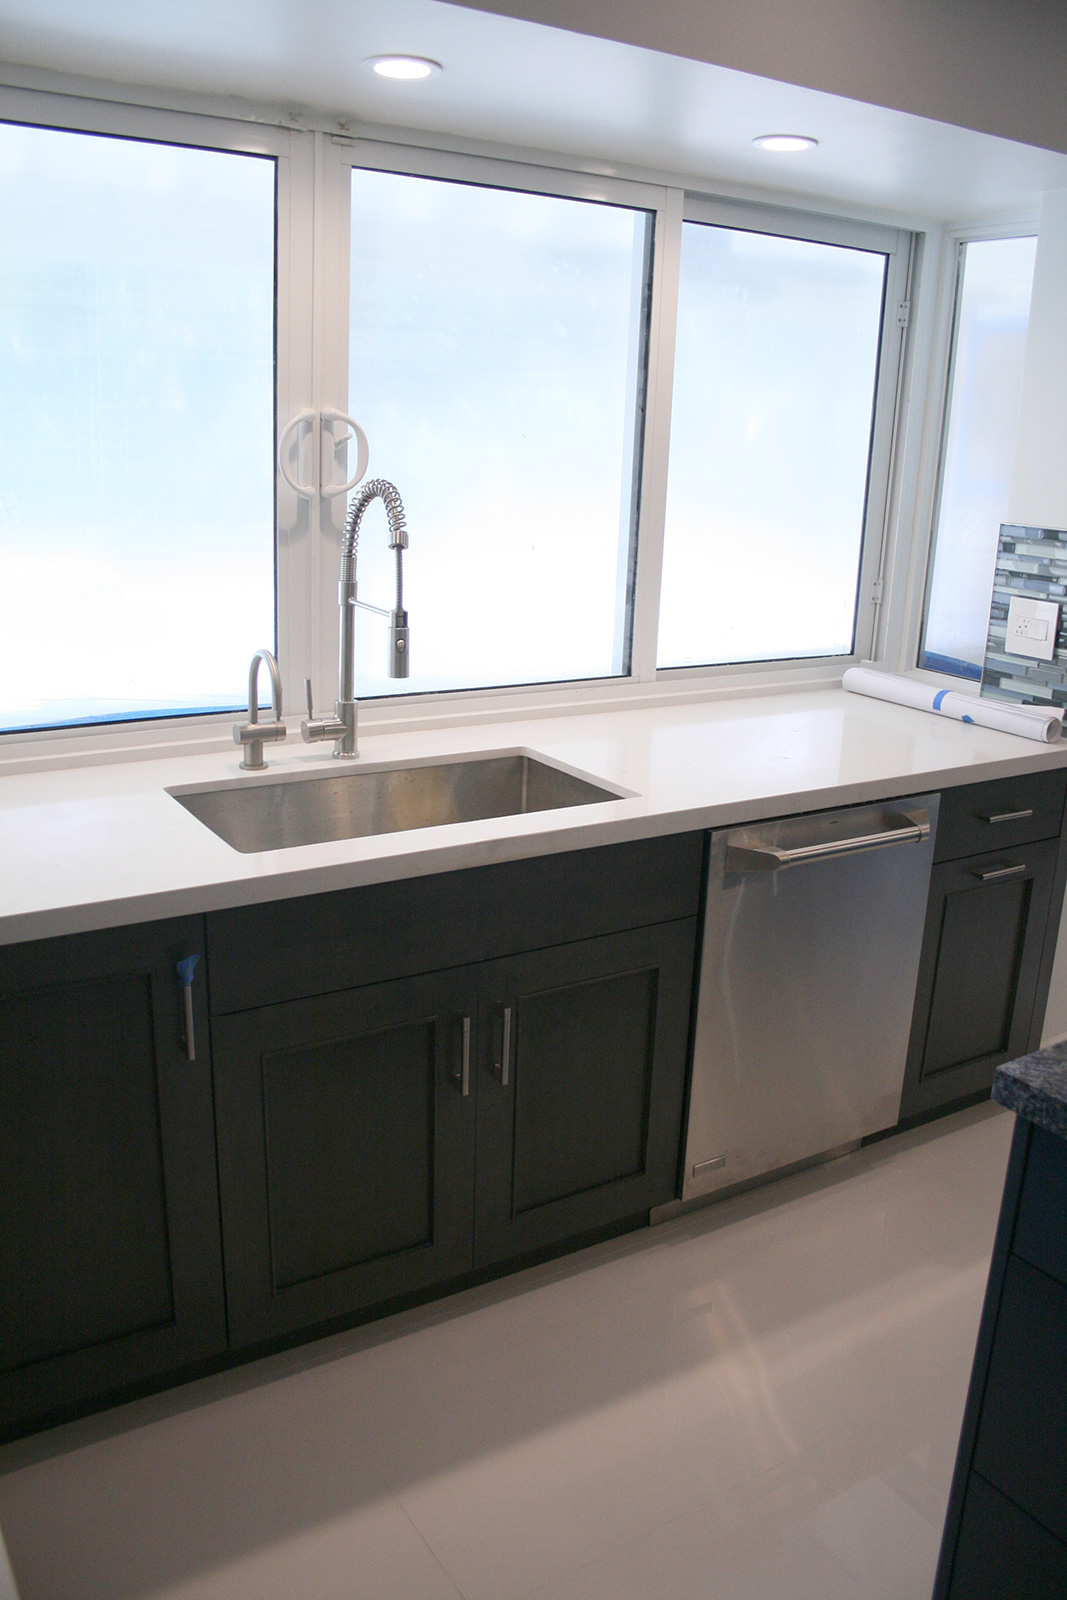 Espresso Cabinets with stainless steel dishwasher & under-mount sink